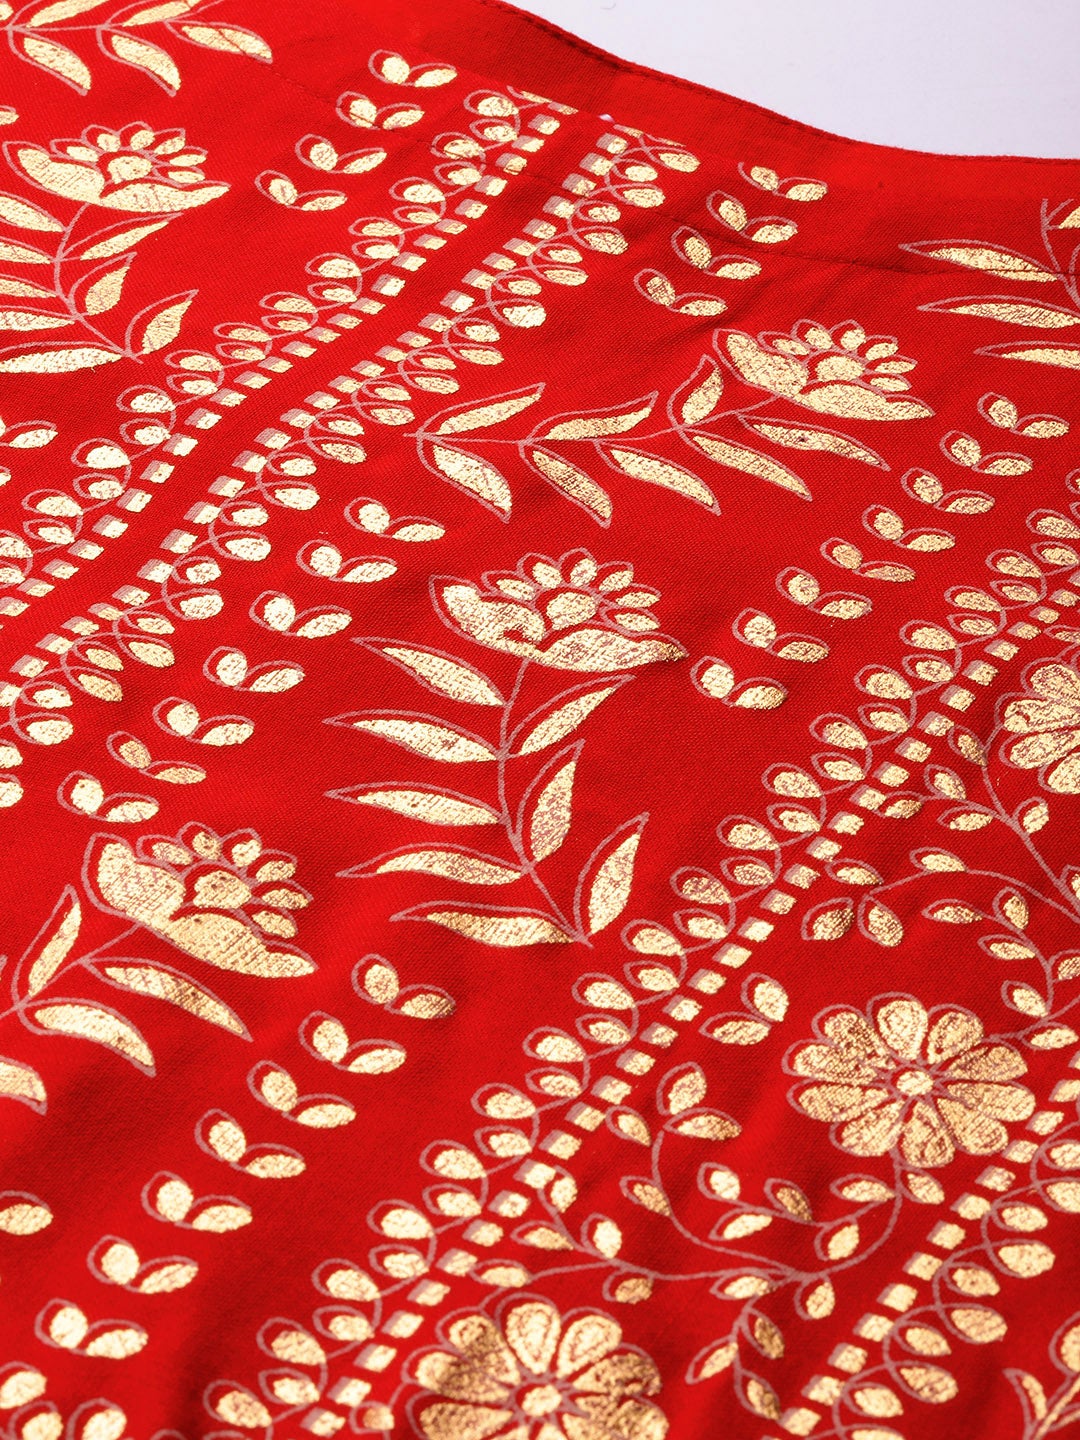 Mindhal Women's Red Colour Khadi Print Straight Rayon Kurta With Palazzo / Salwar Suit Set